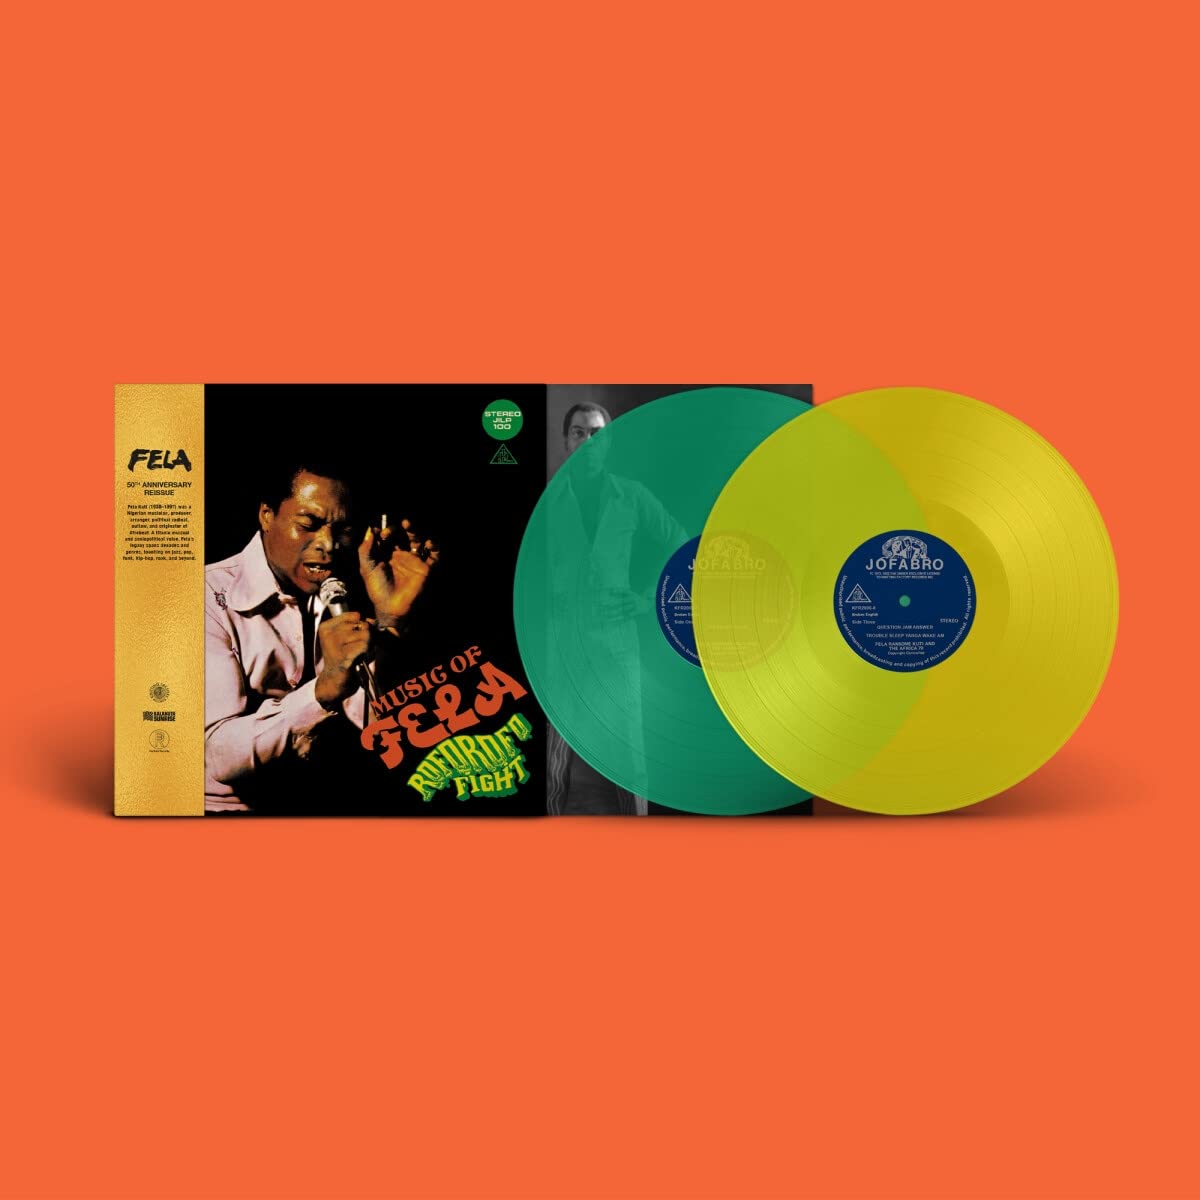 Fela Kuti Roforofo Fight Green/Yellow Vinyl LP